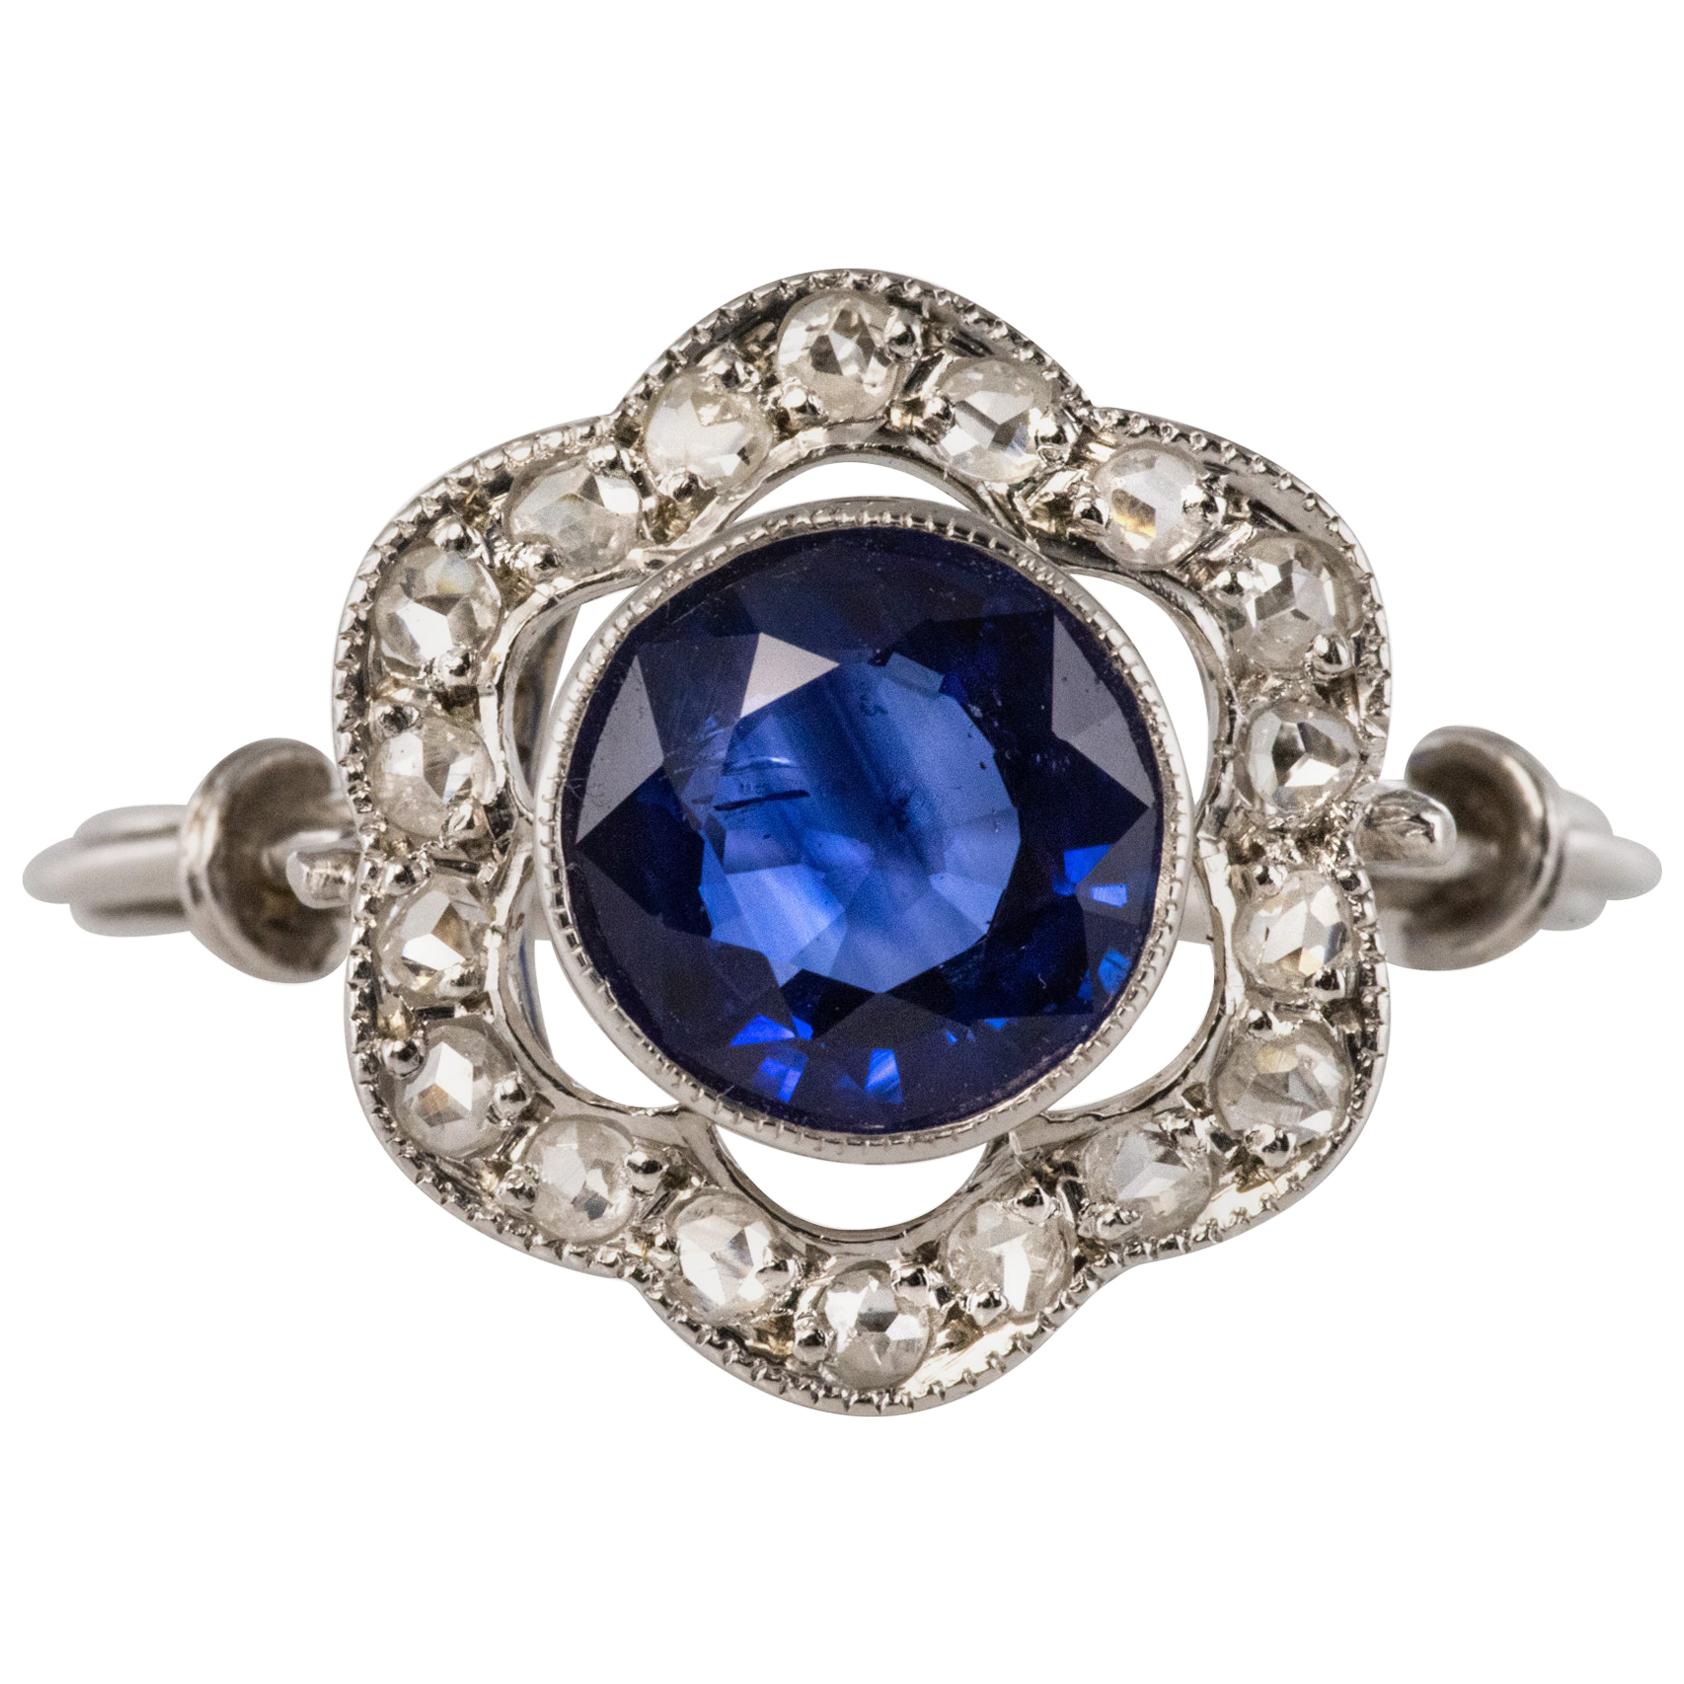 French 1920s Art Deco 1.23 Carat Sapphire Diamonds Platinum Ring